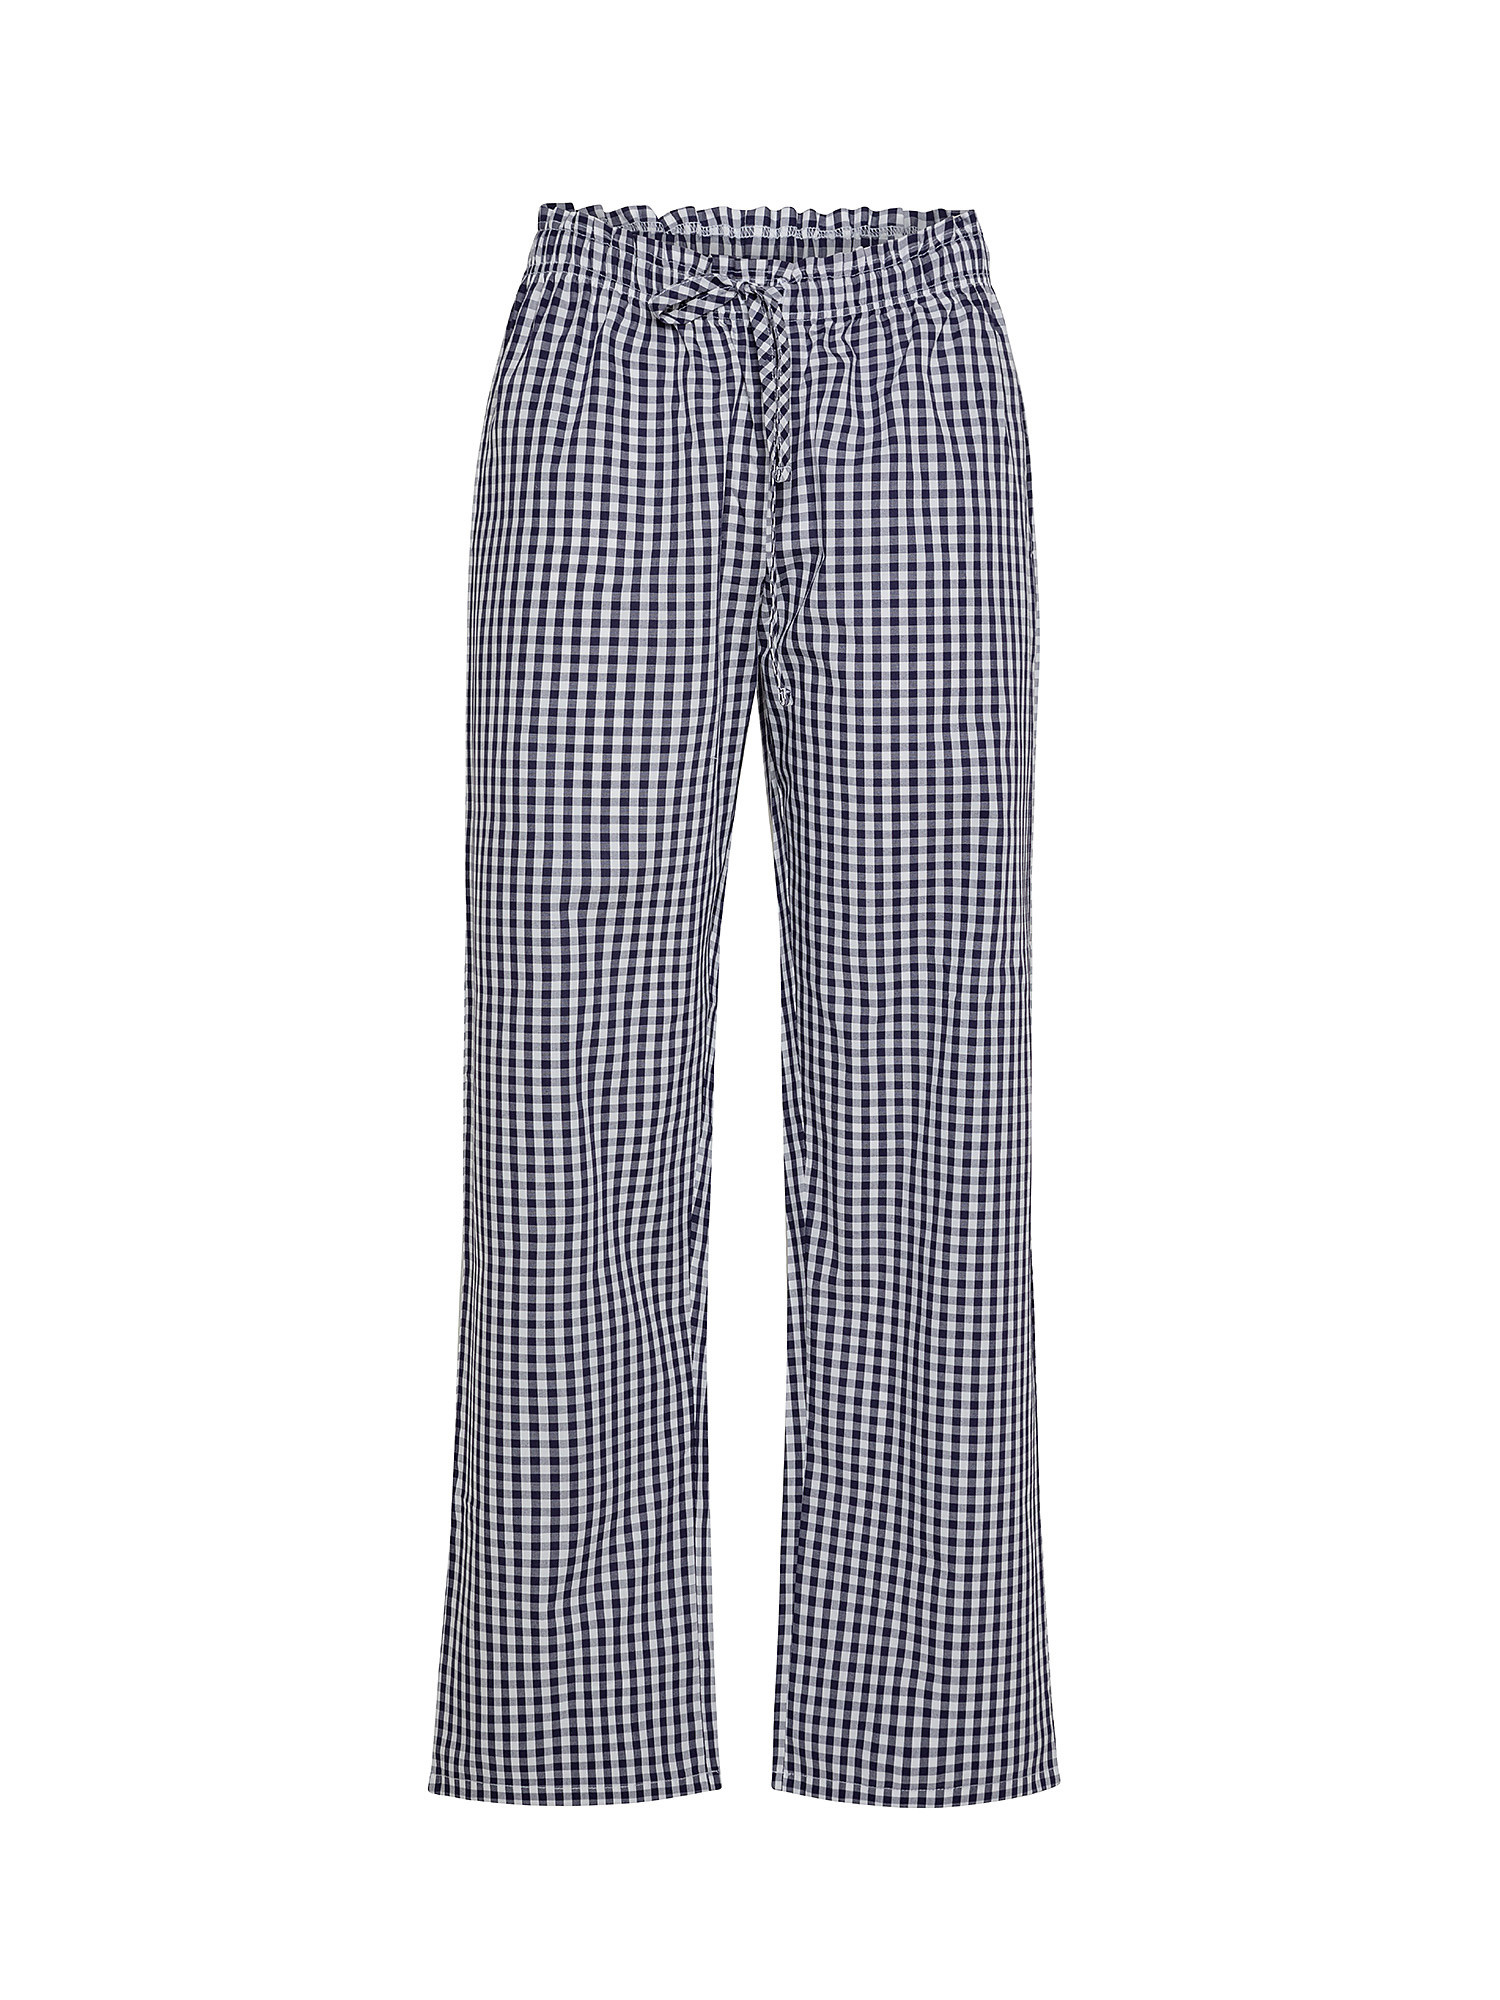 Pantaloni cotone tinto filo a quadretti, Blu, large